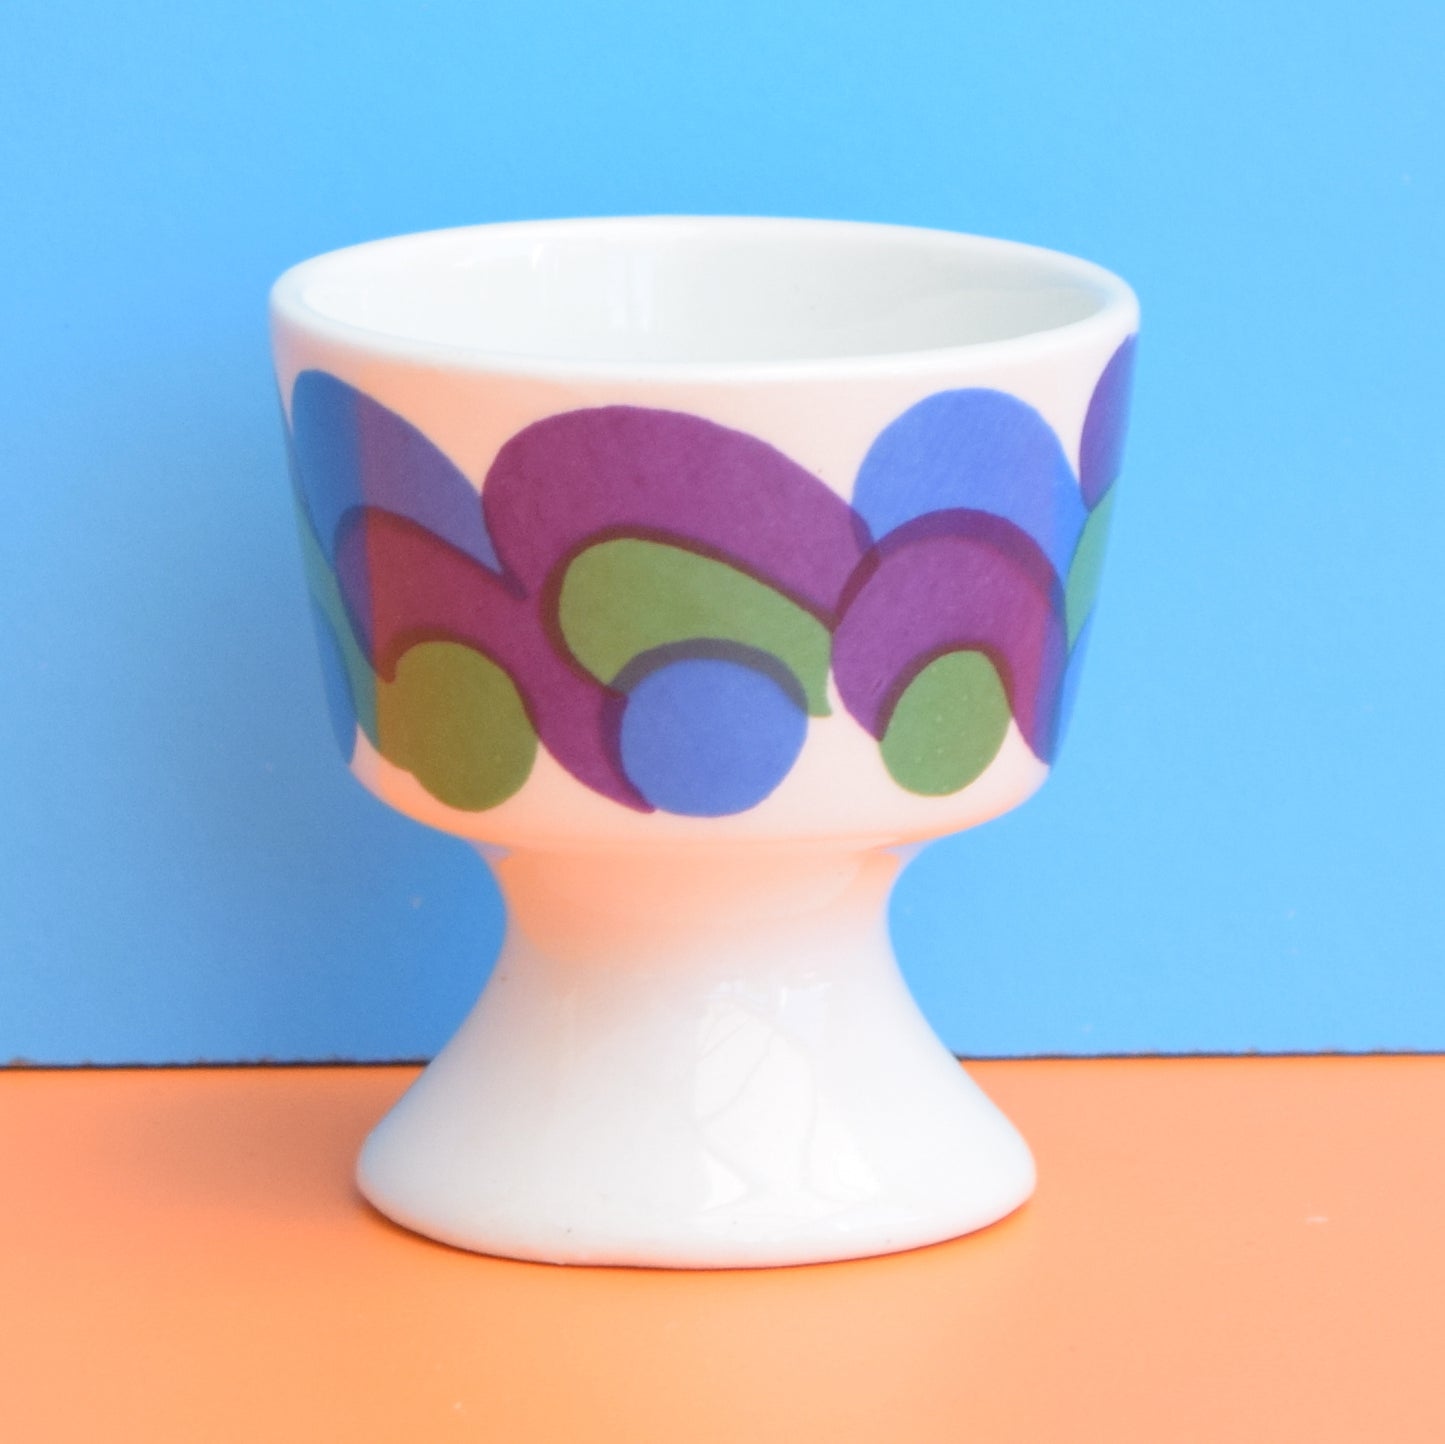 Vintage 1960s Ceramic Egg Cups - Finel Arabia, Flower / Swirl Patterns